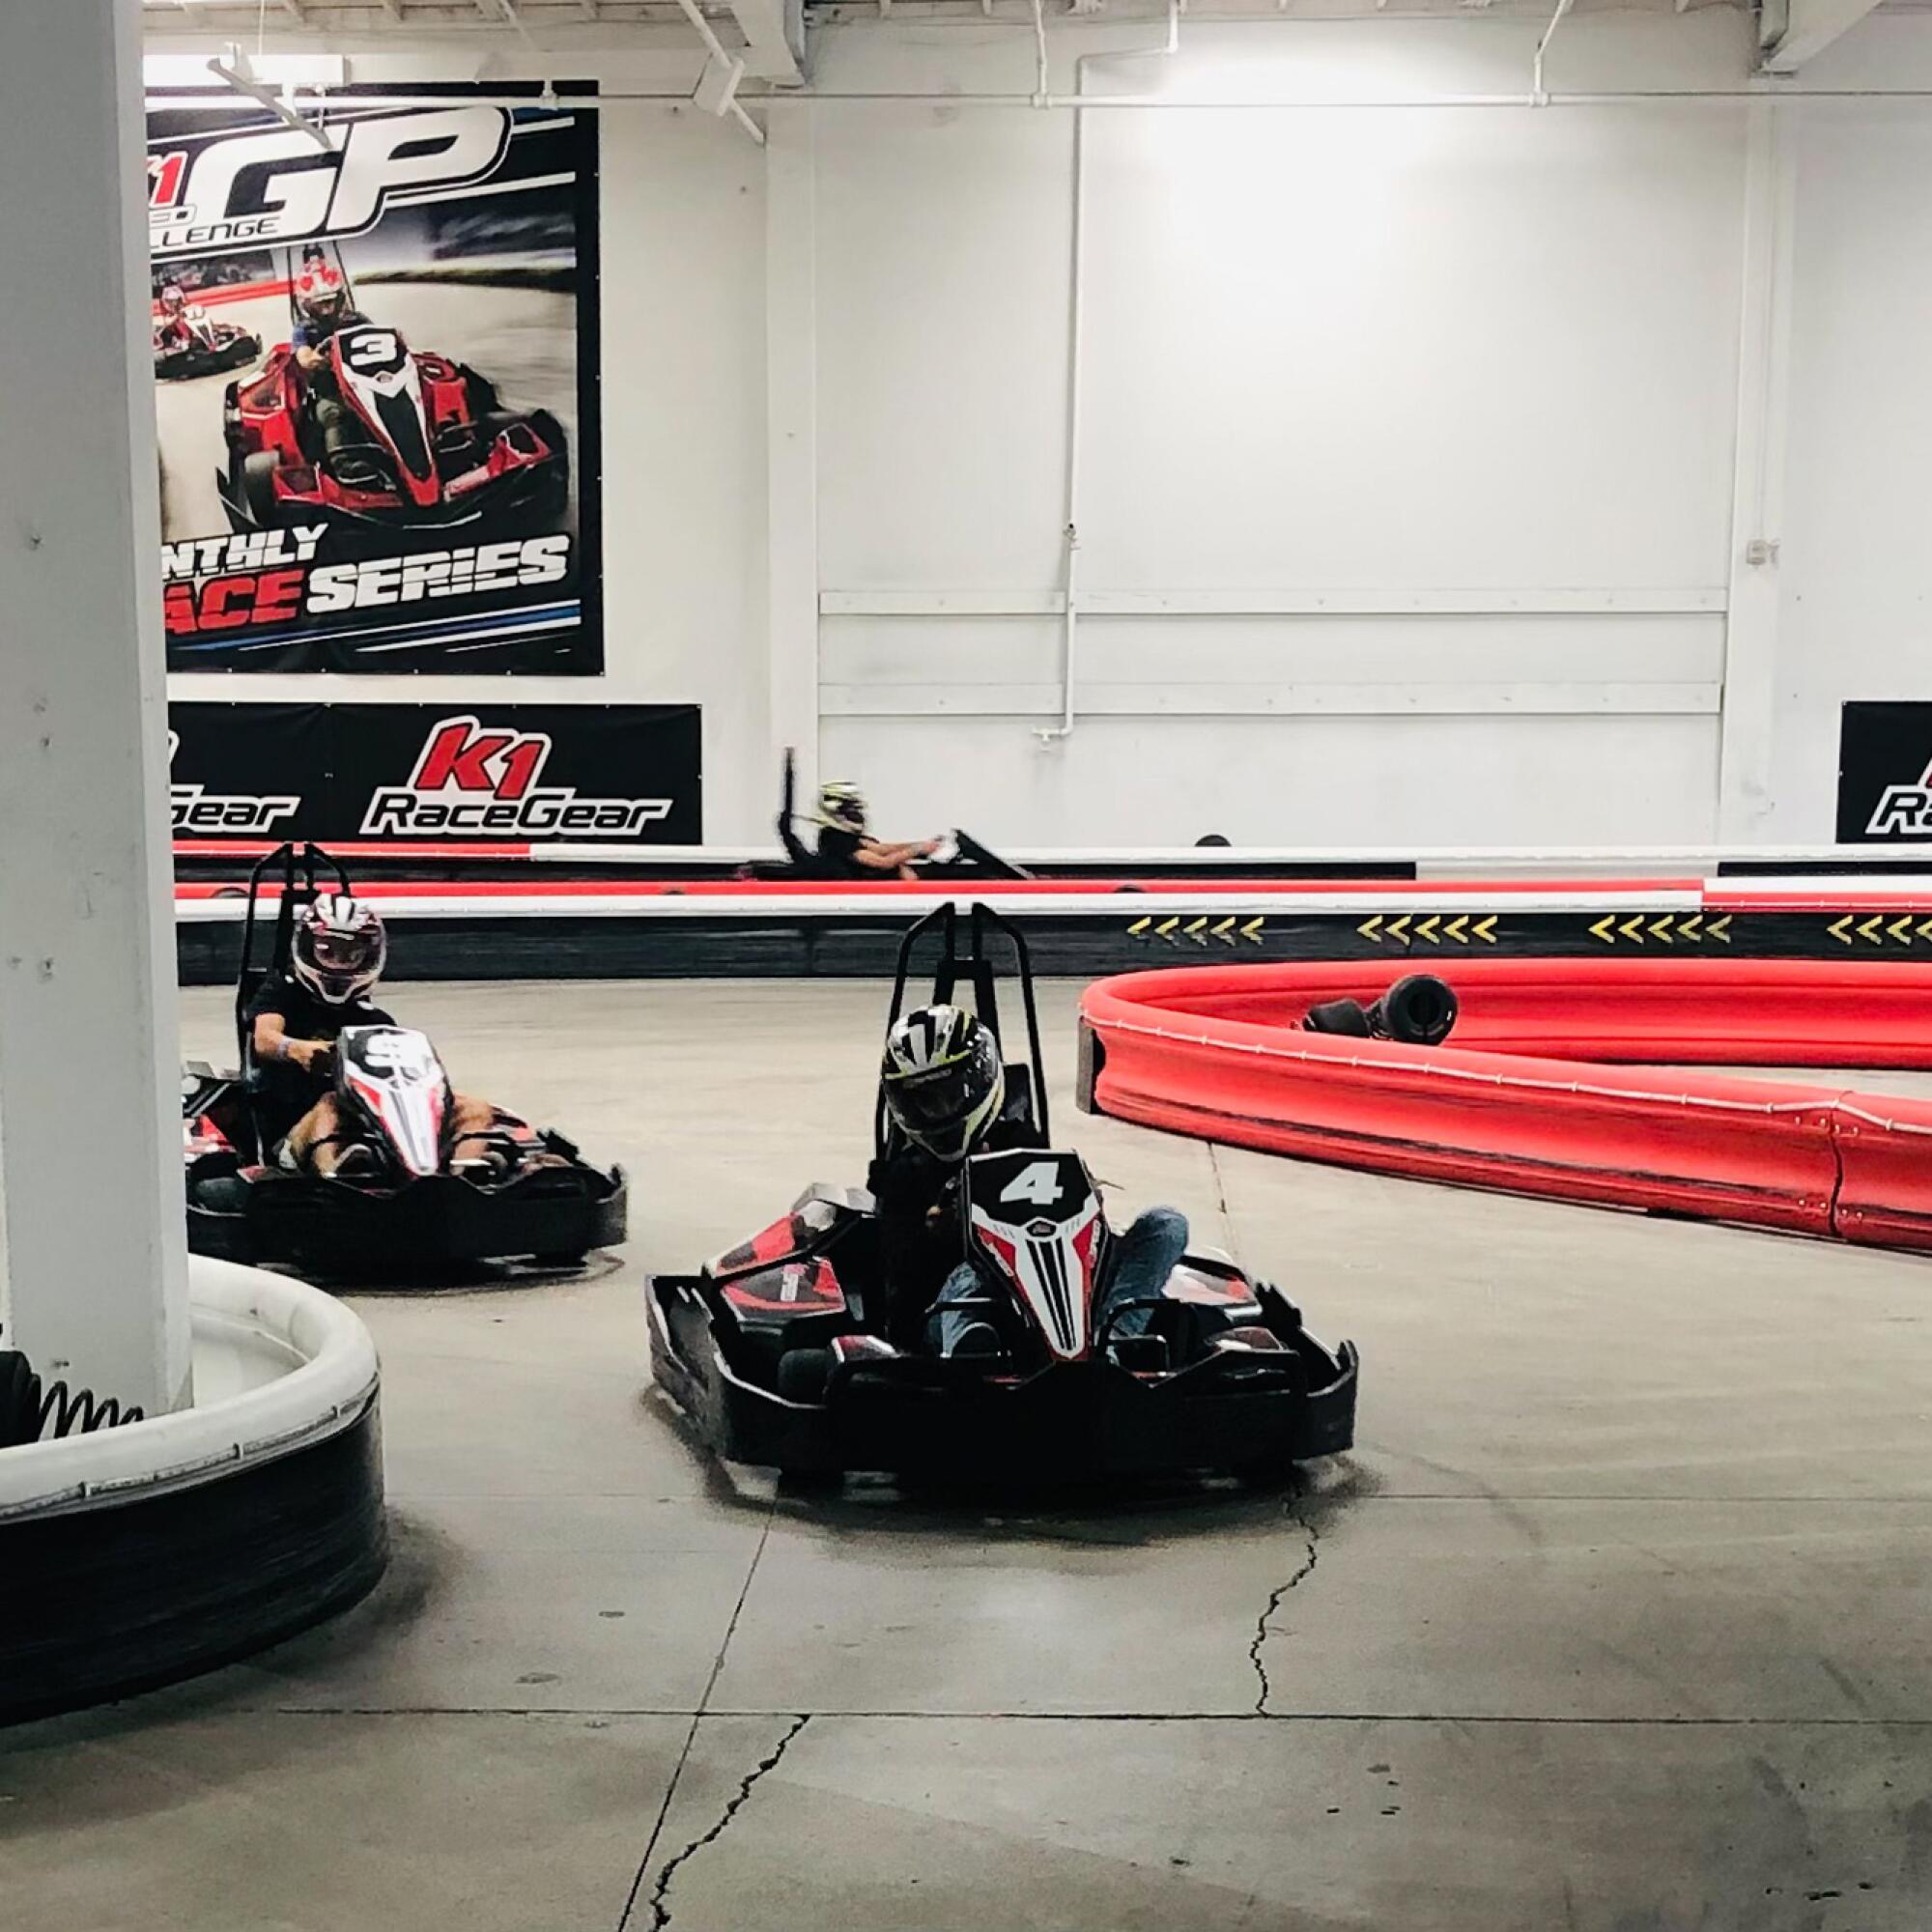 Go-karts racing indoors.